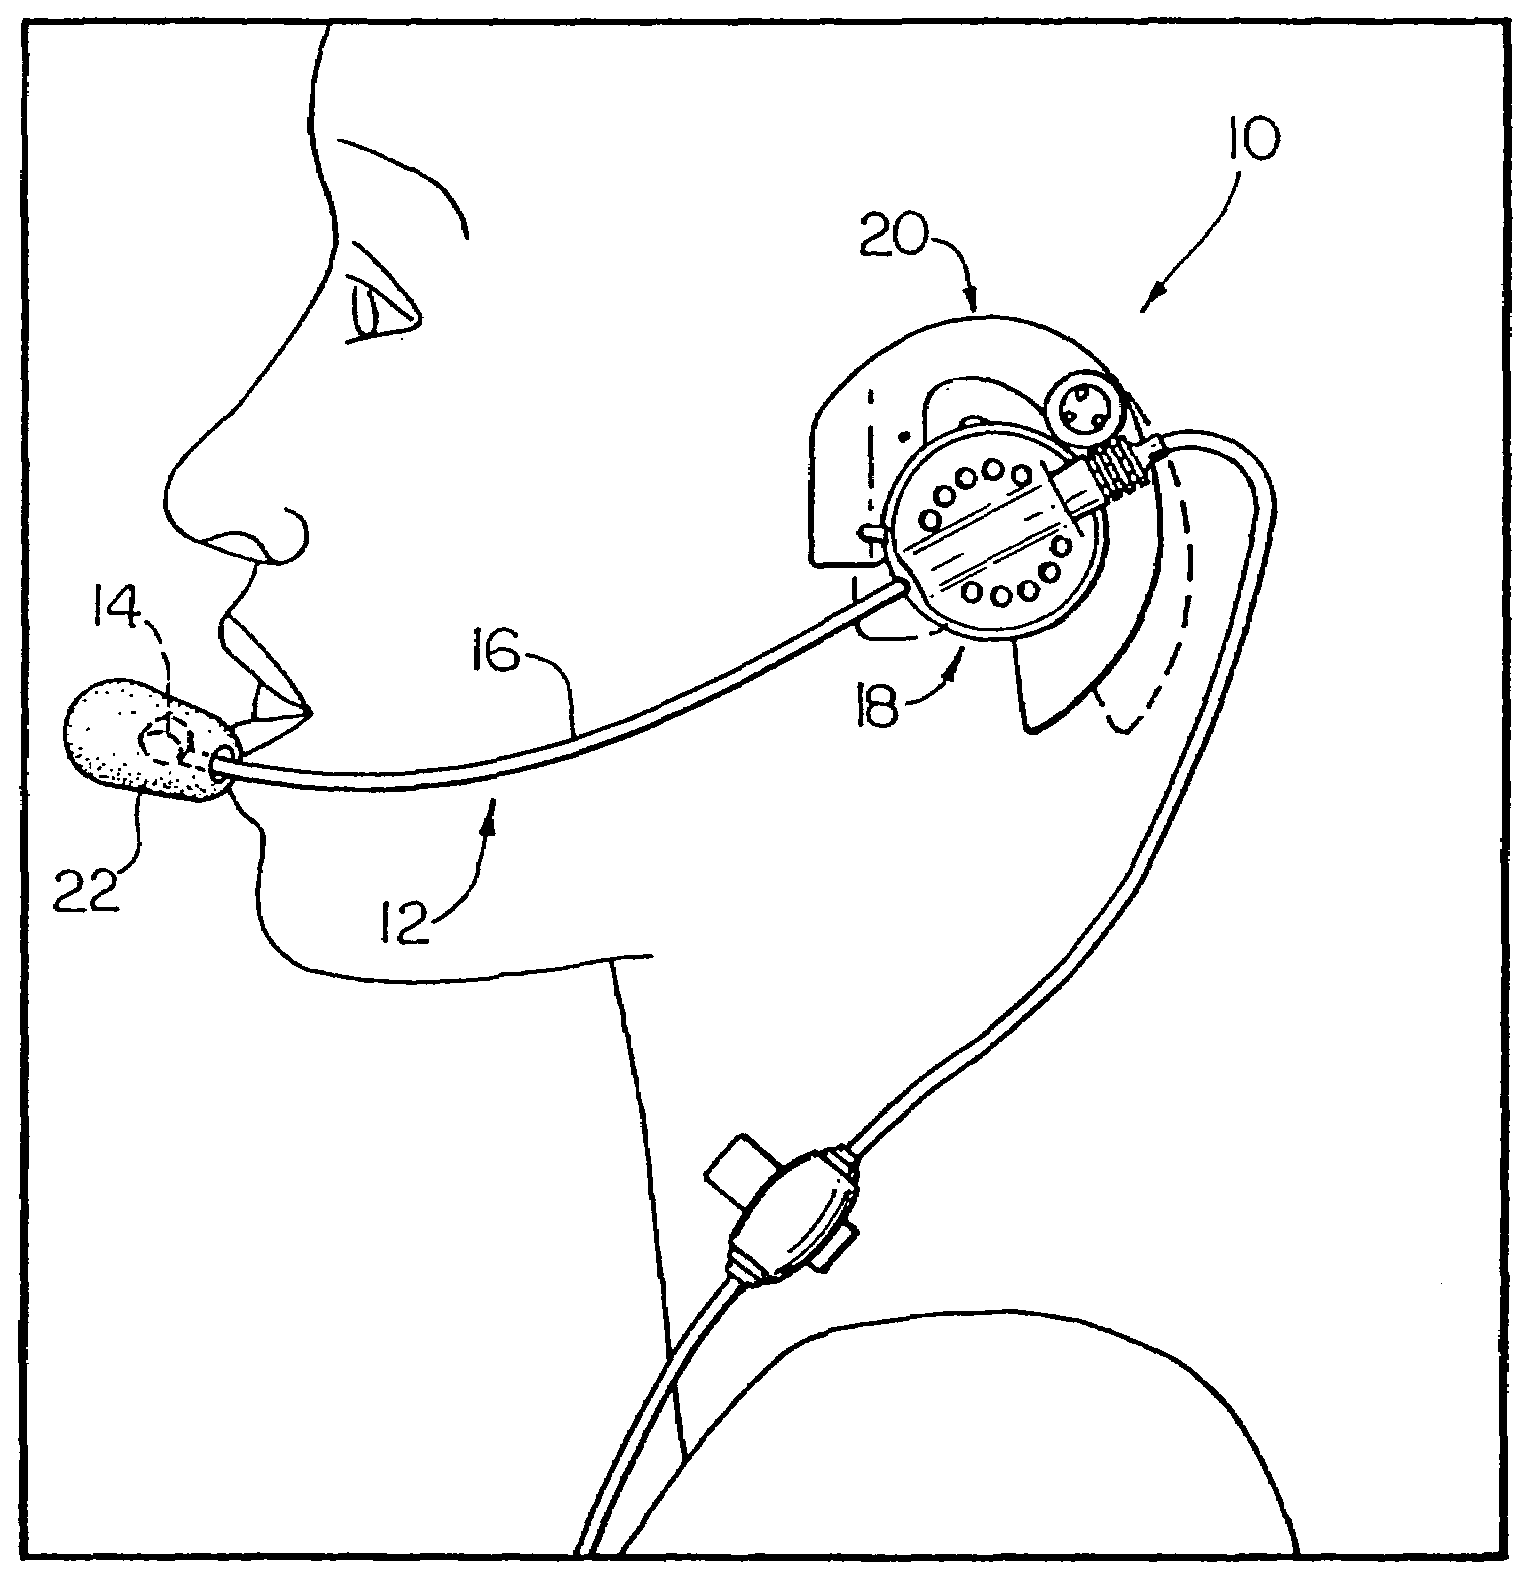 Telephone headset